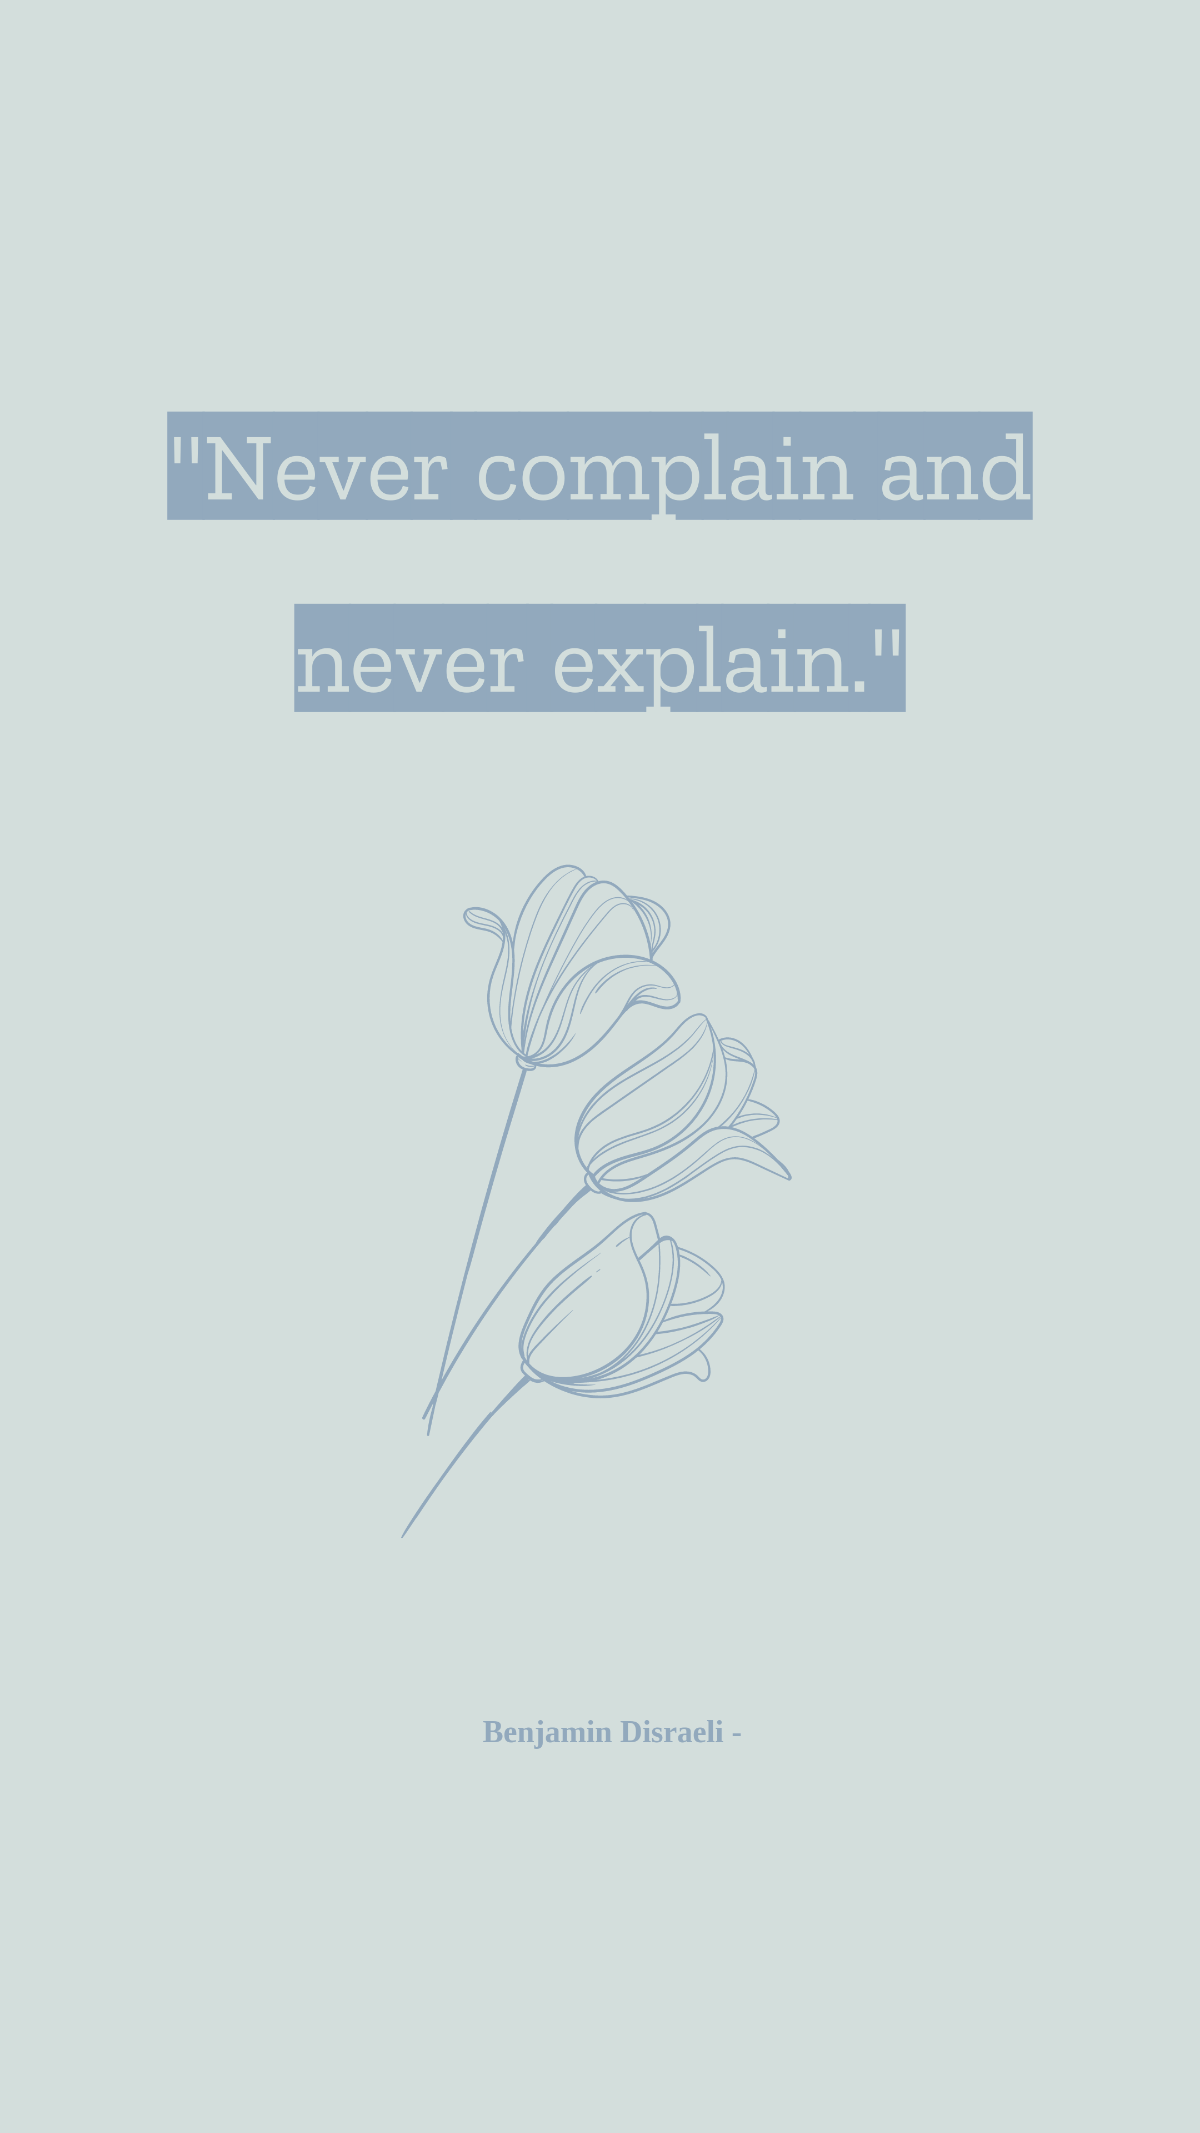 Benjamin Disraeli - Never complain and never explain. Template